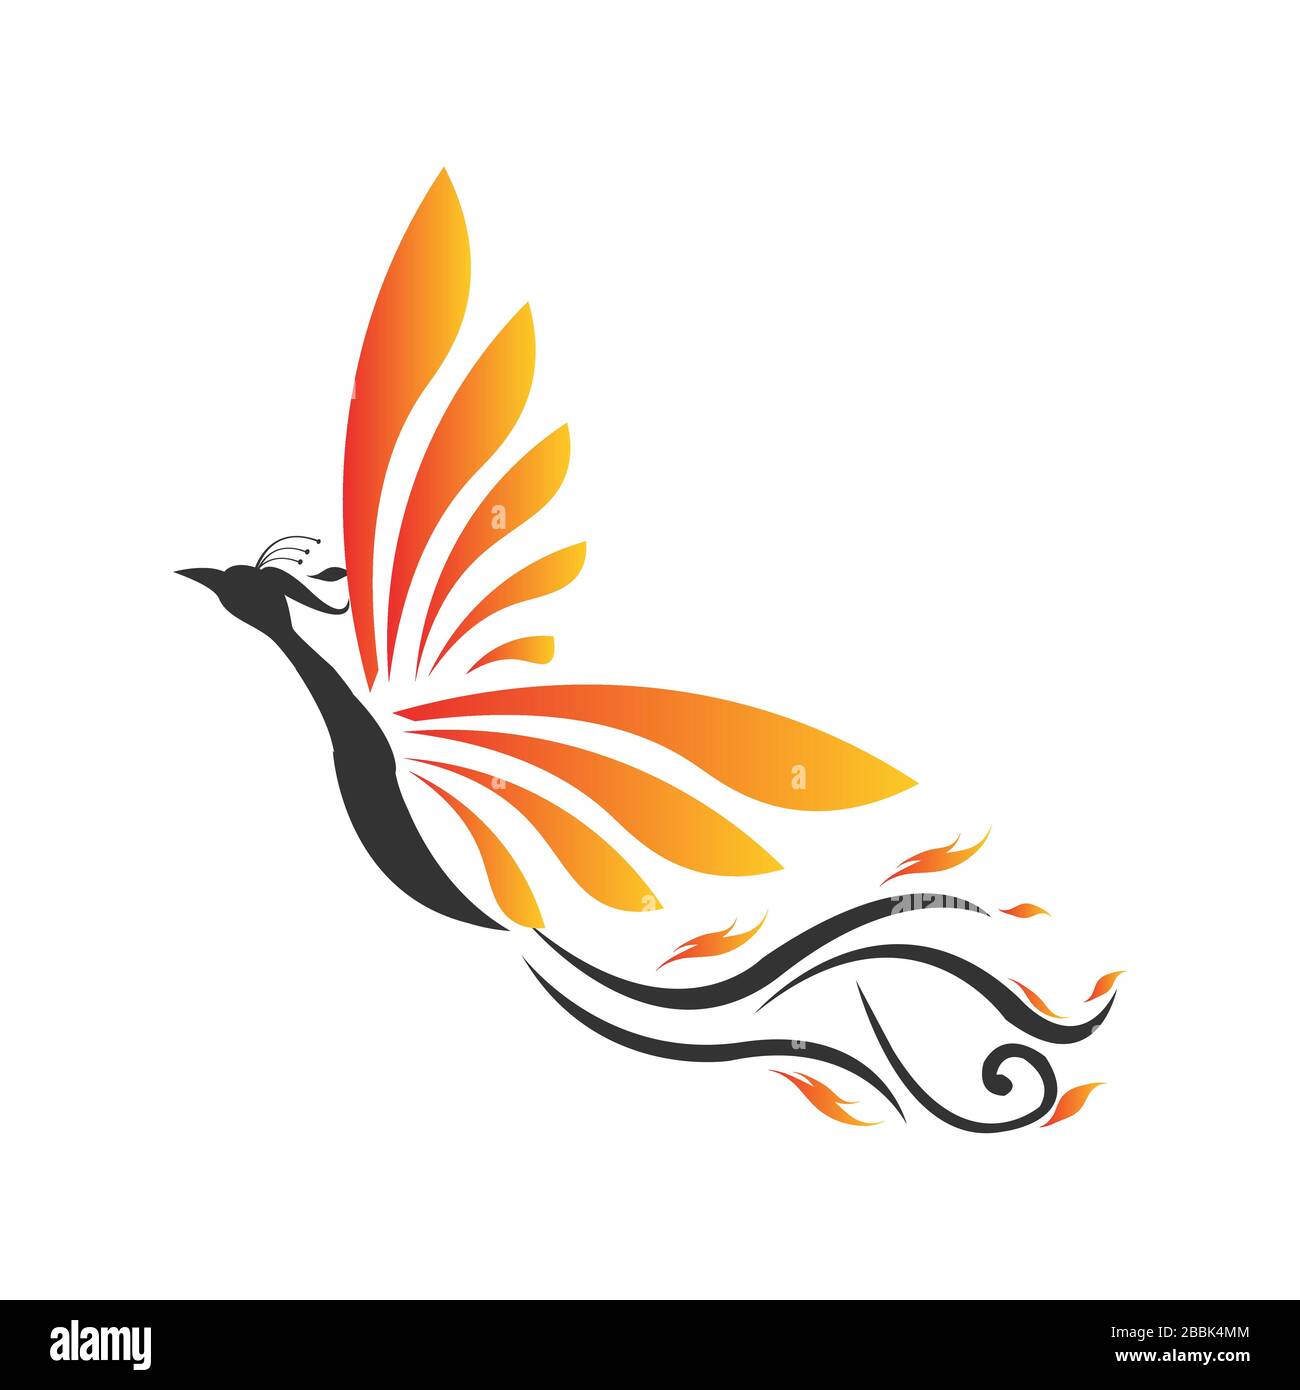 Flying High Fire Vogel Phönix Logo Design Vektor-Illustrationen Grafik Stock Vektor